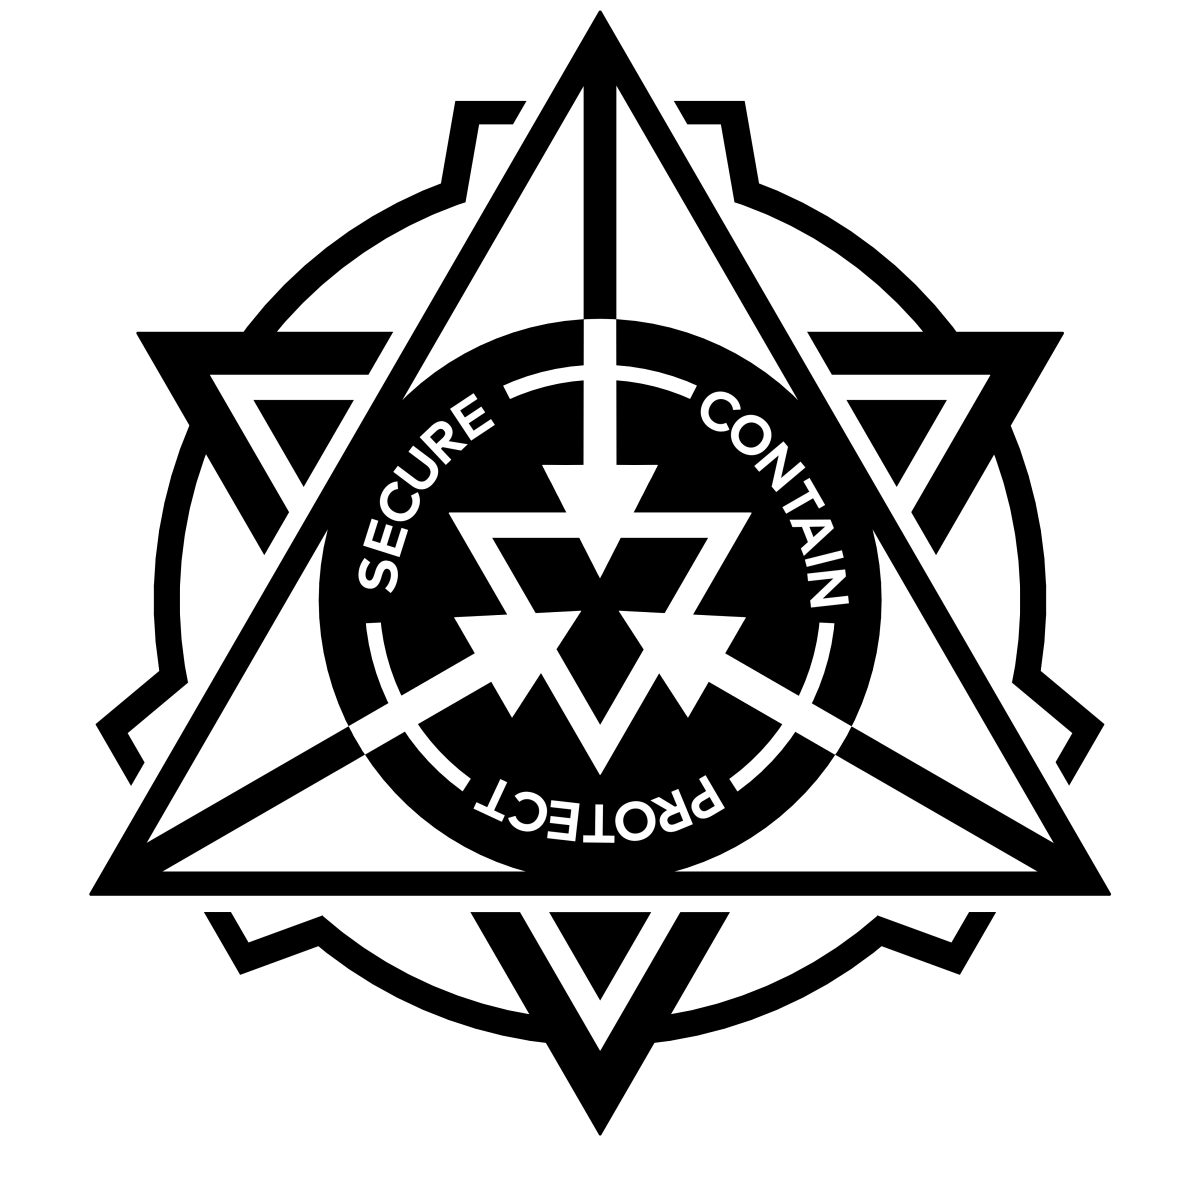 File:Scp-logo-ru.png - Wikimedia Commons